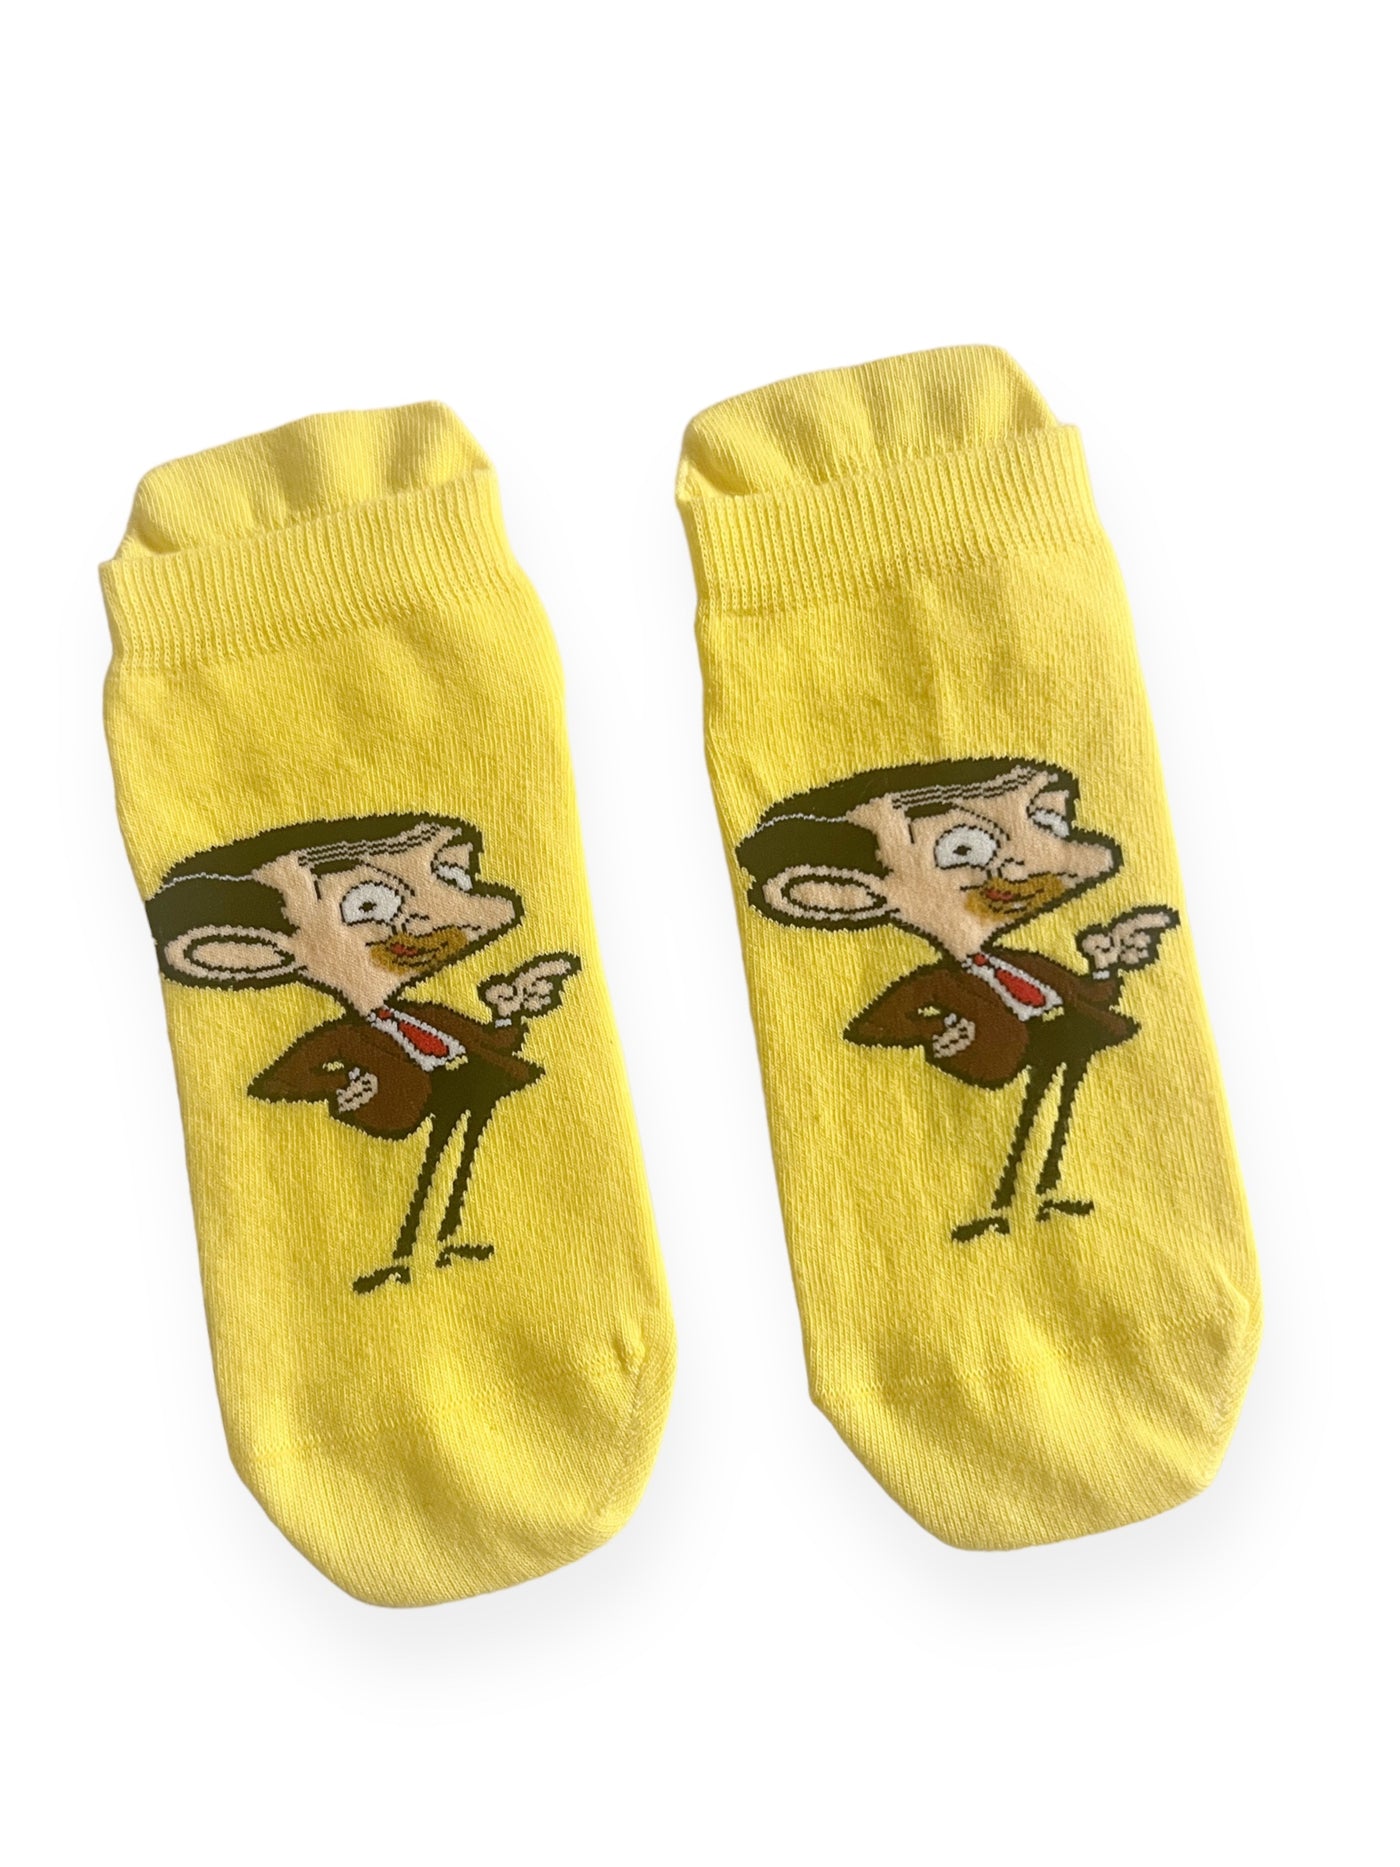 Mr. Bean socks - PROBOXS